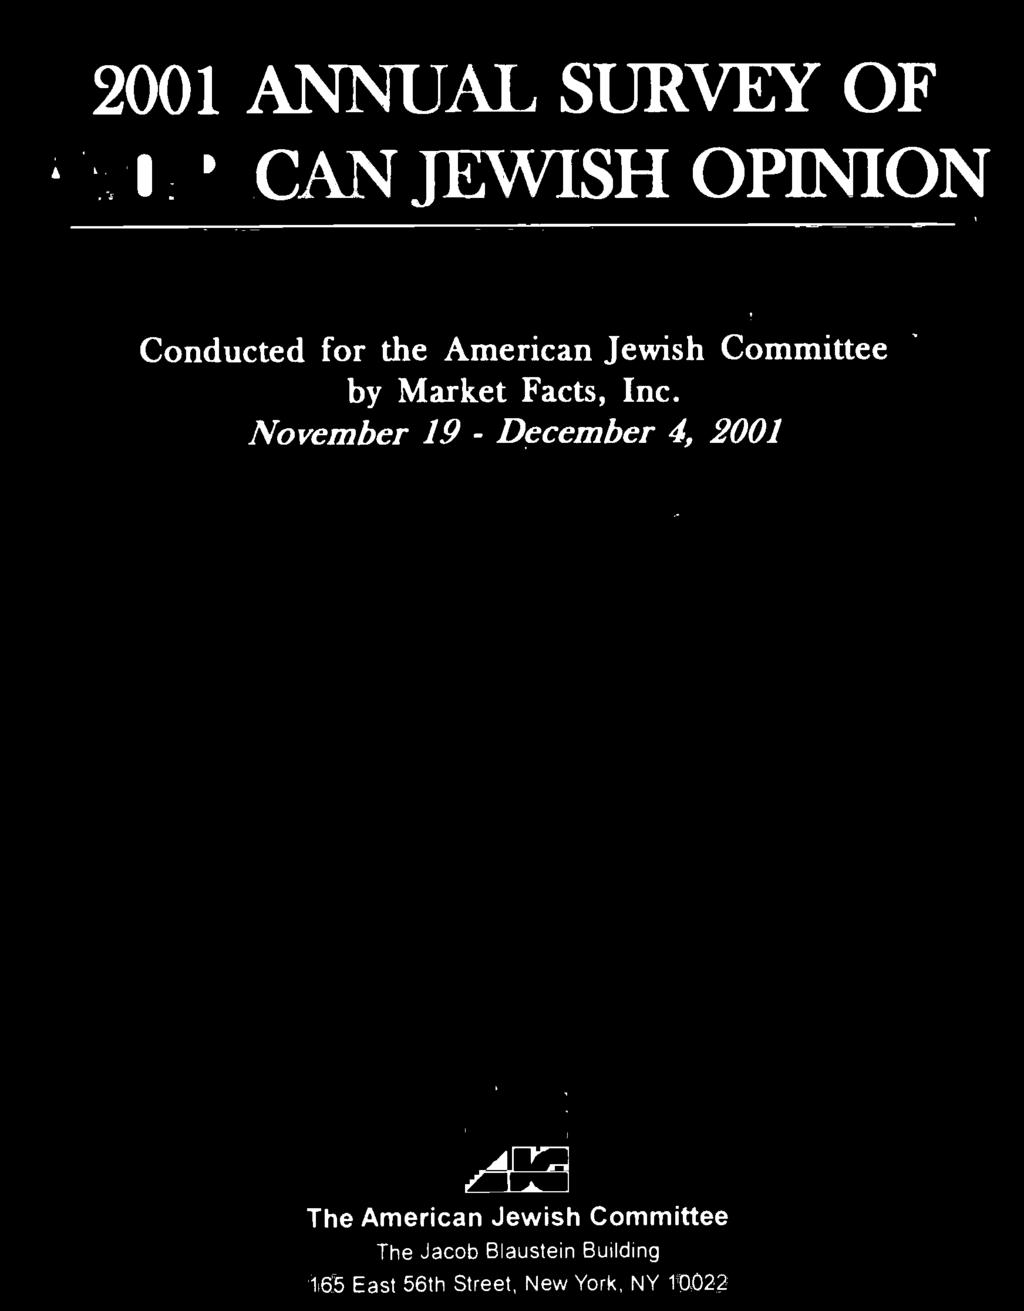 November 19 - December 4, 2001 The American Jewish Committee